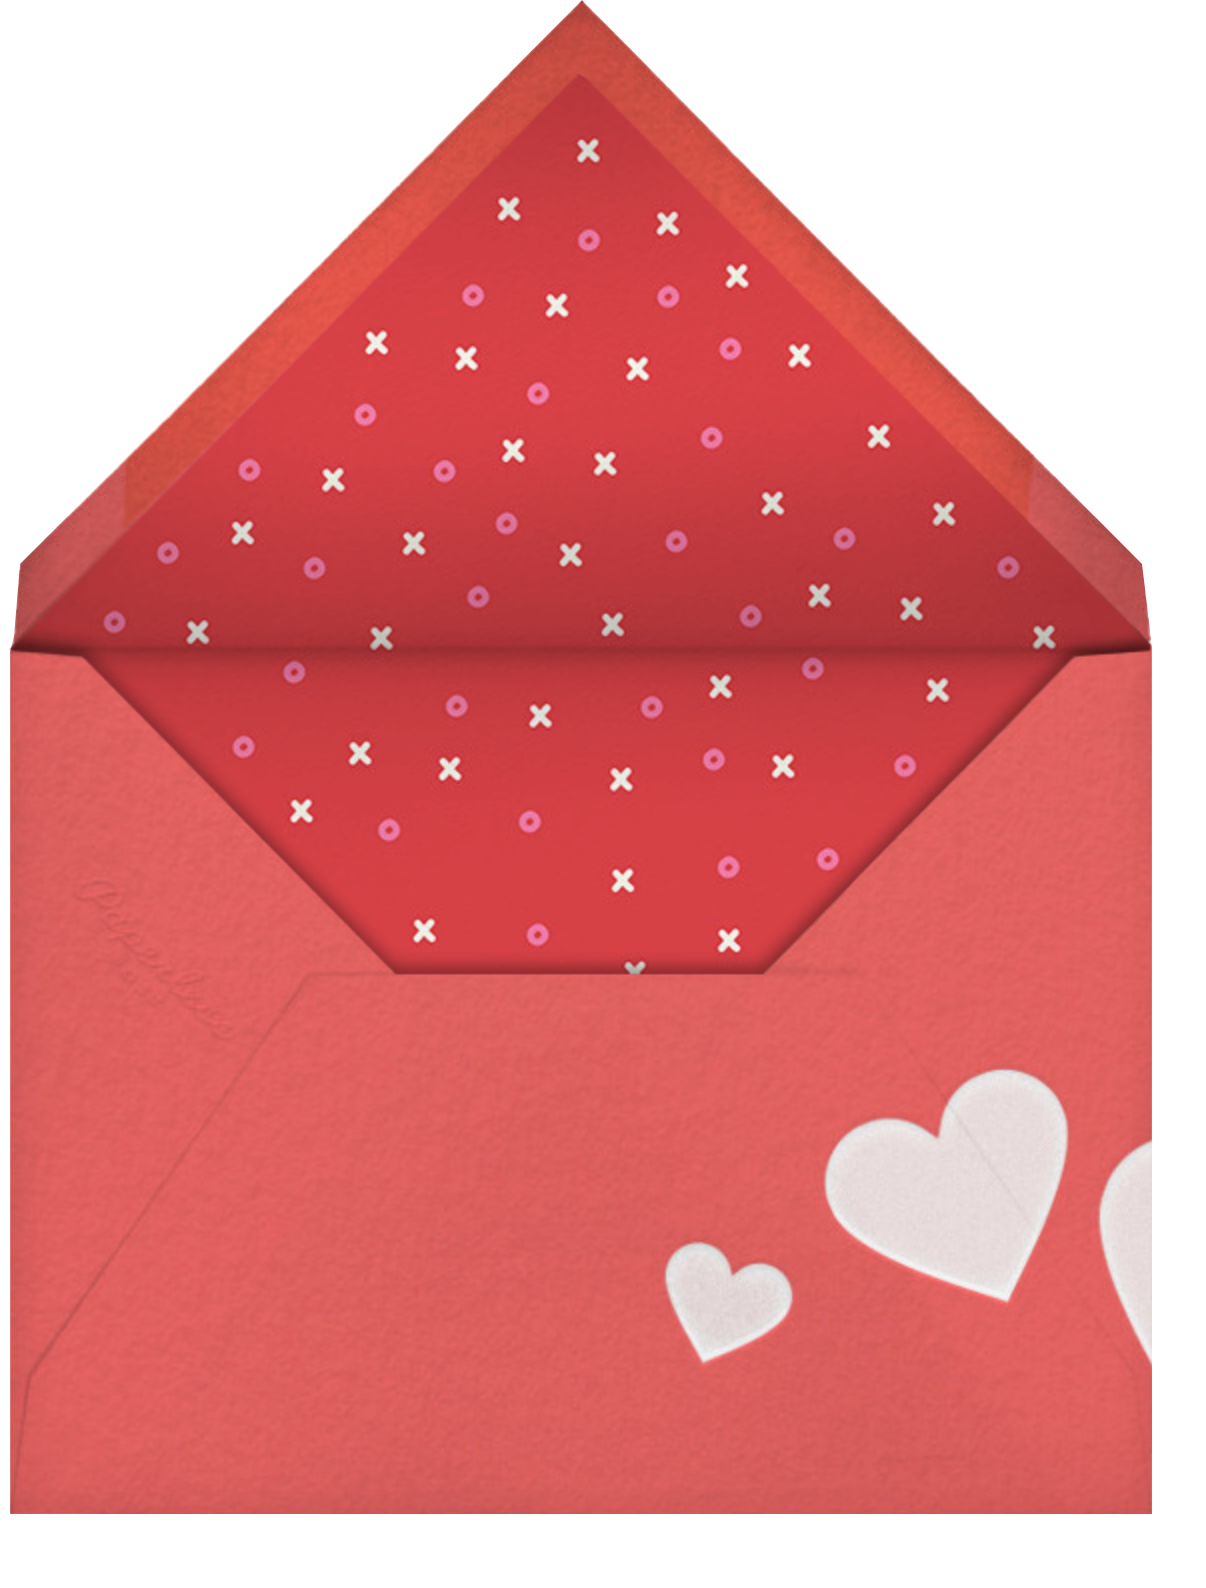 XOXO - Paperless Post - Envelope